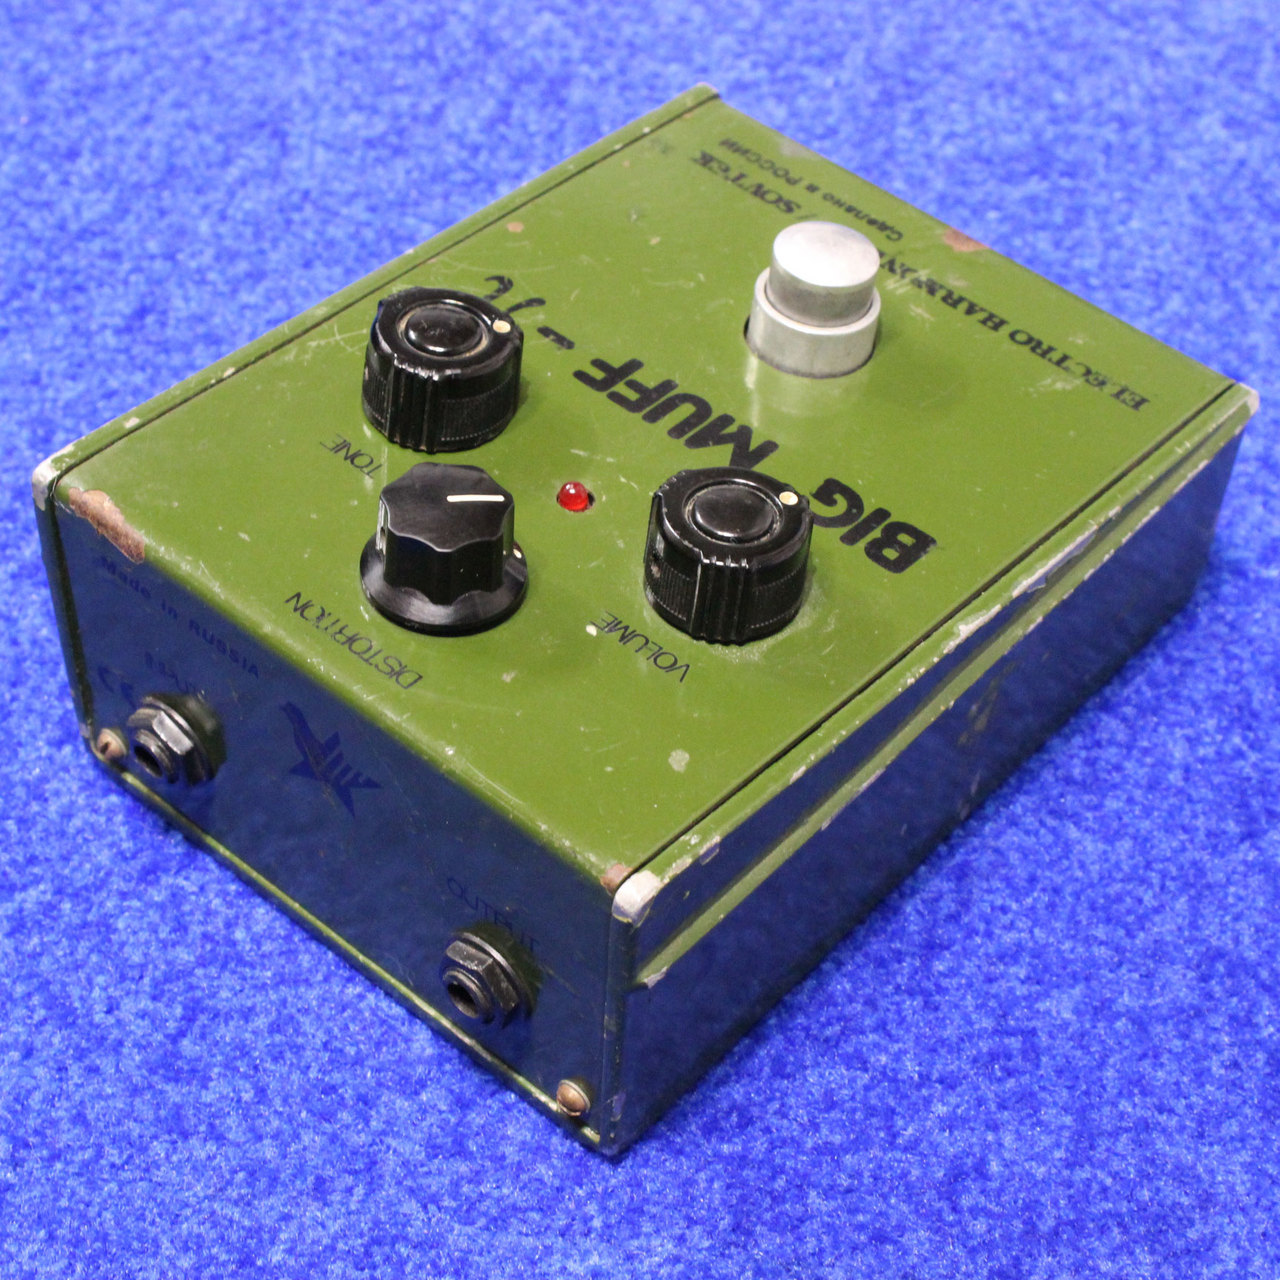 Electro-Harmonix SOVTEK BIG MUFF Pi Russian Army Green Bubble Font 